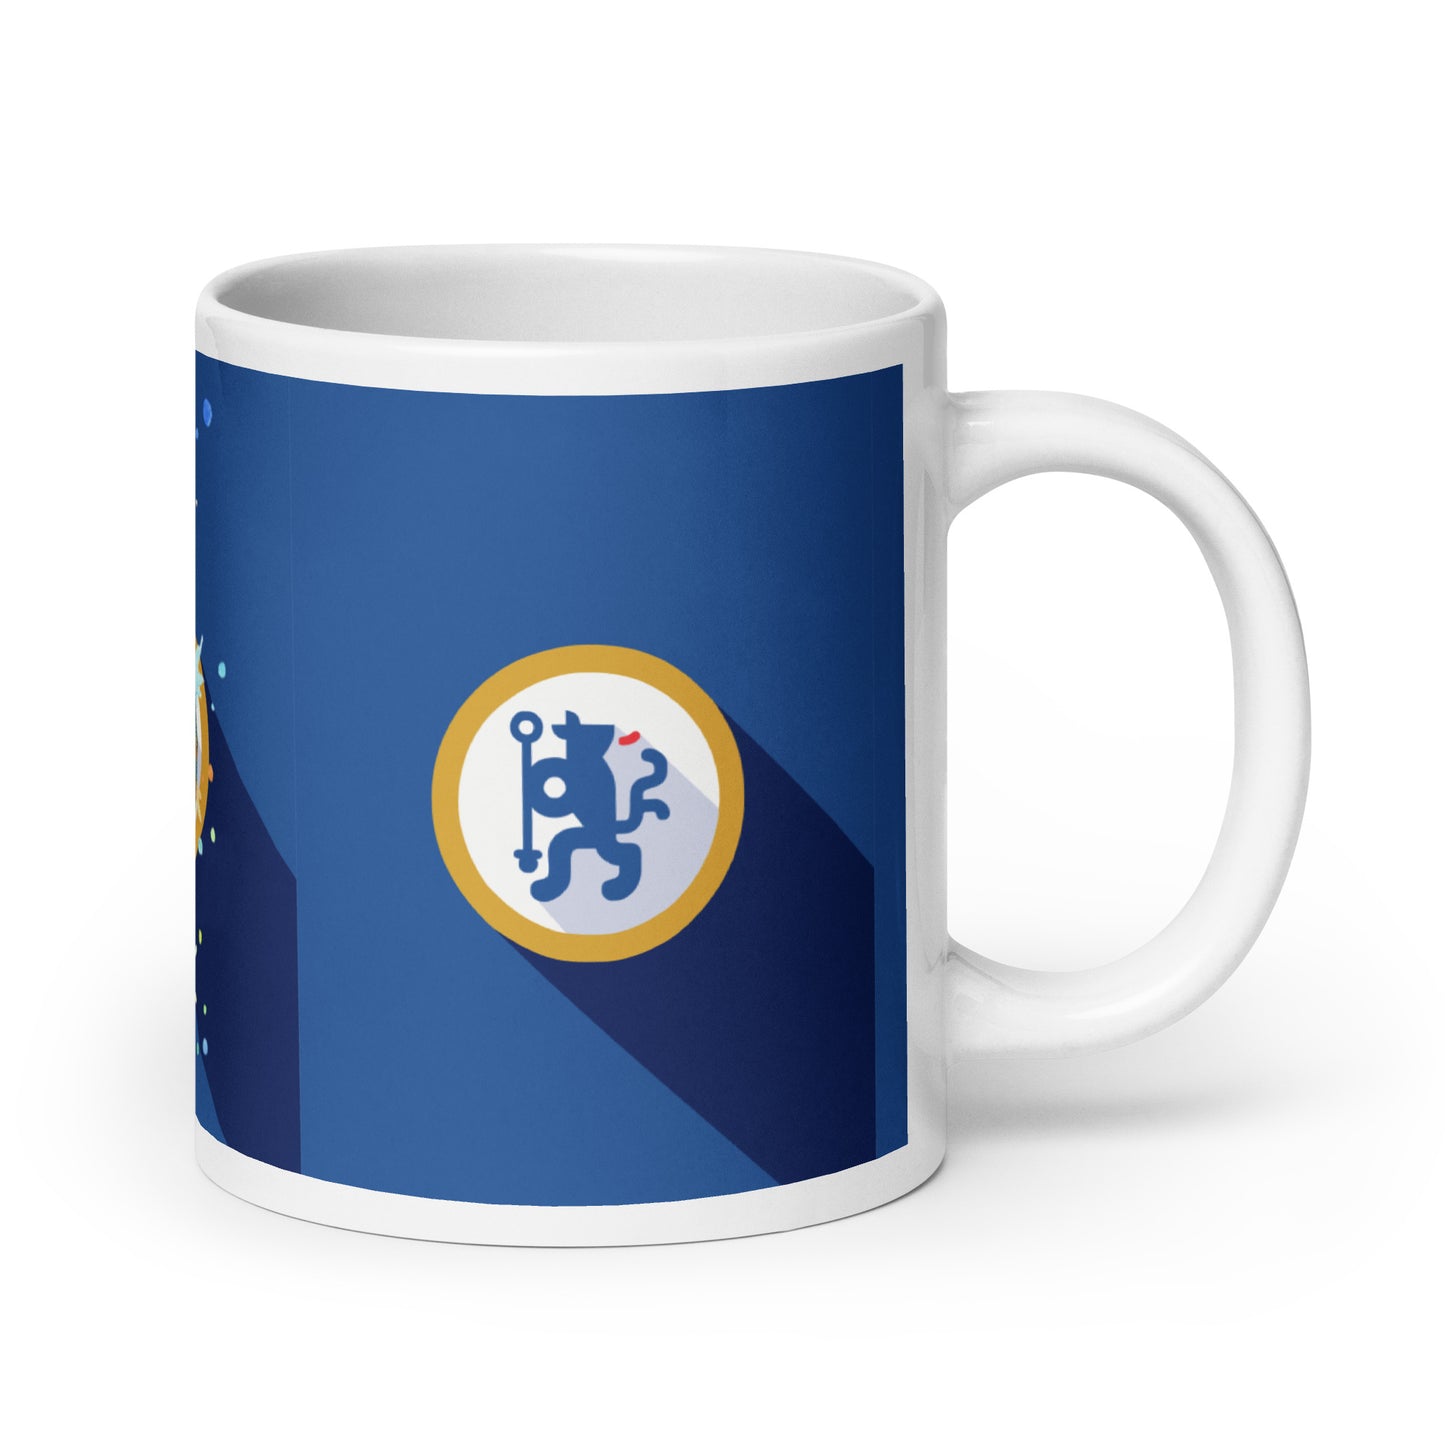 Chelsea Frankie Lampard Vintage Coffee mug